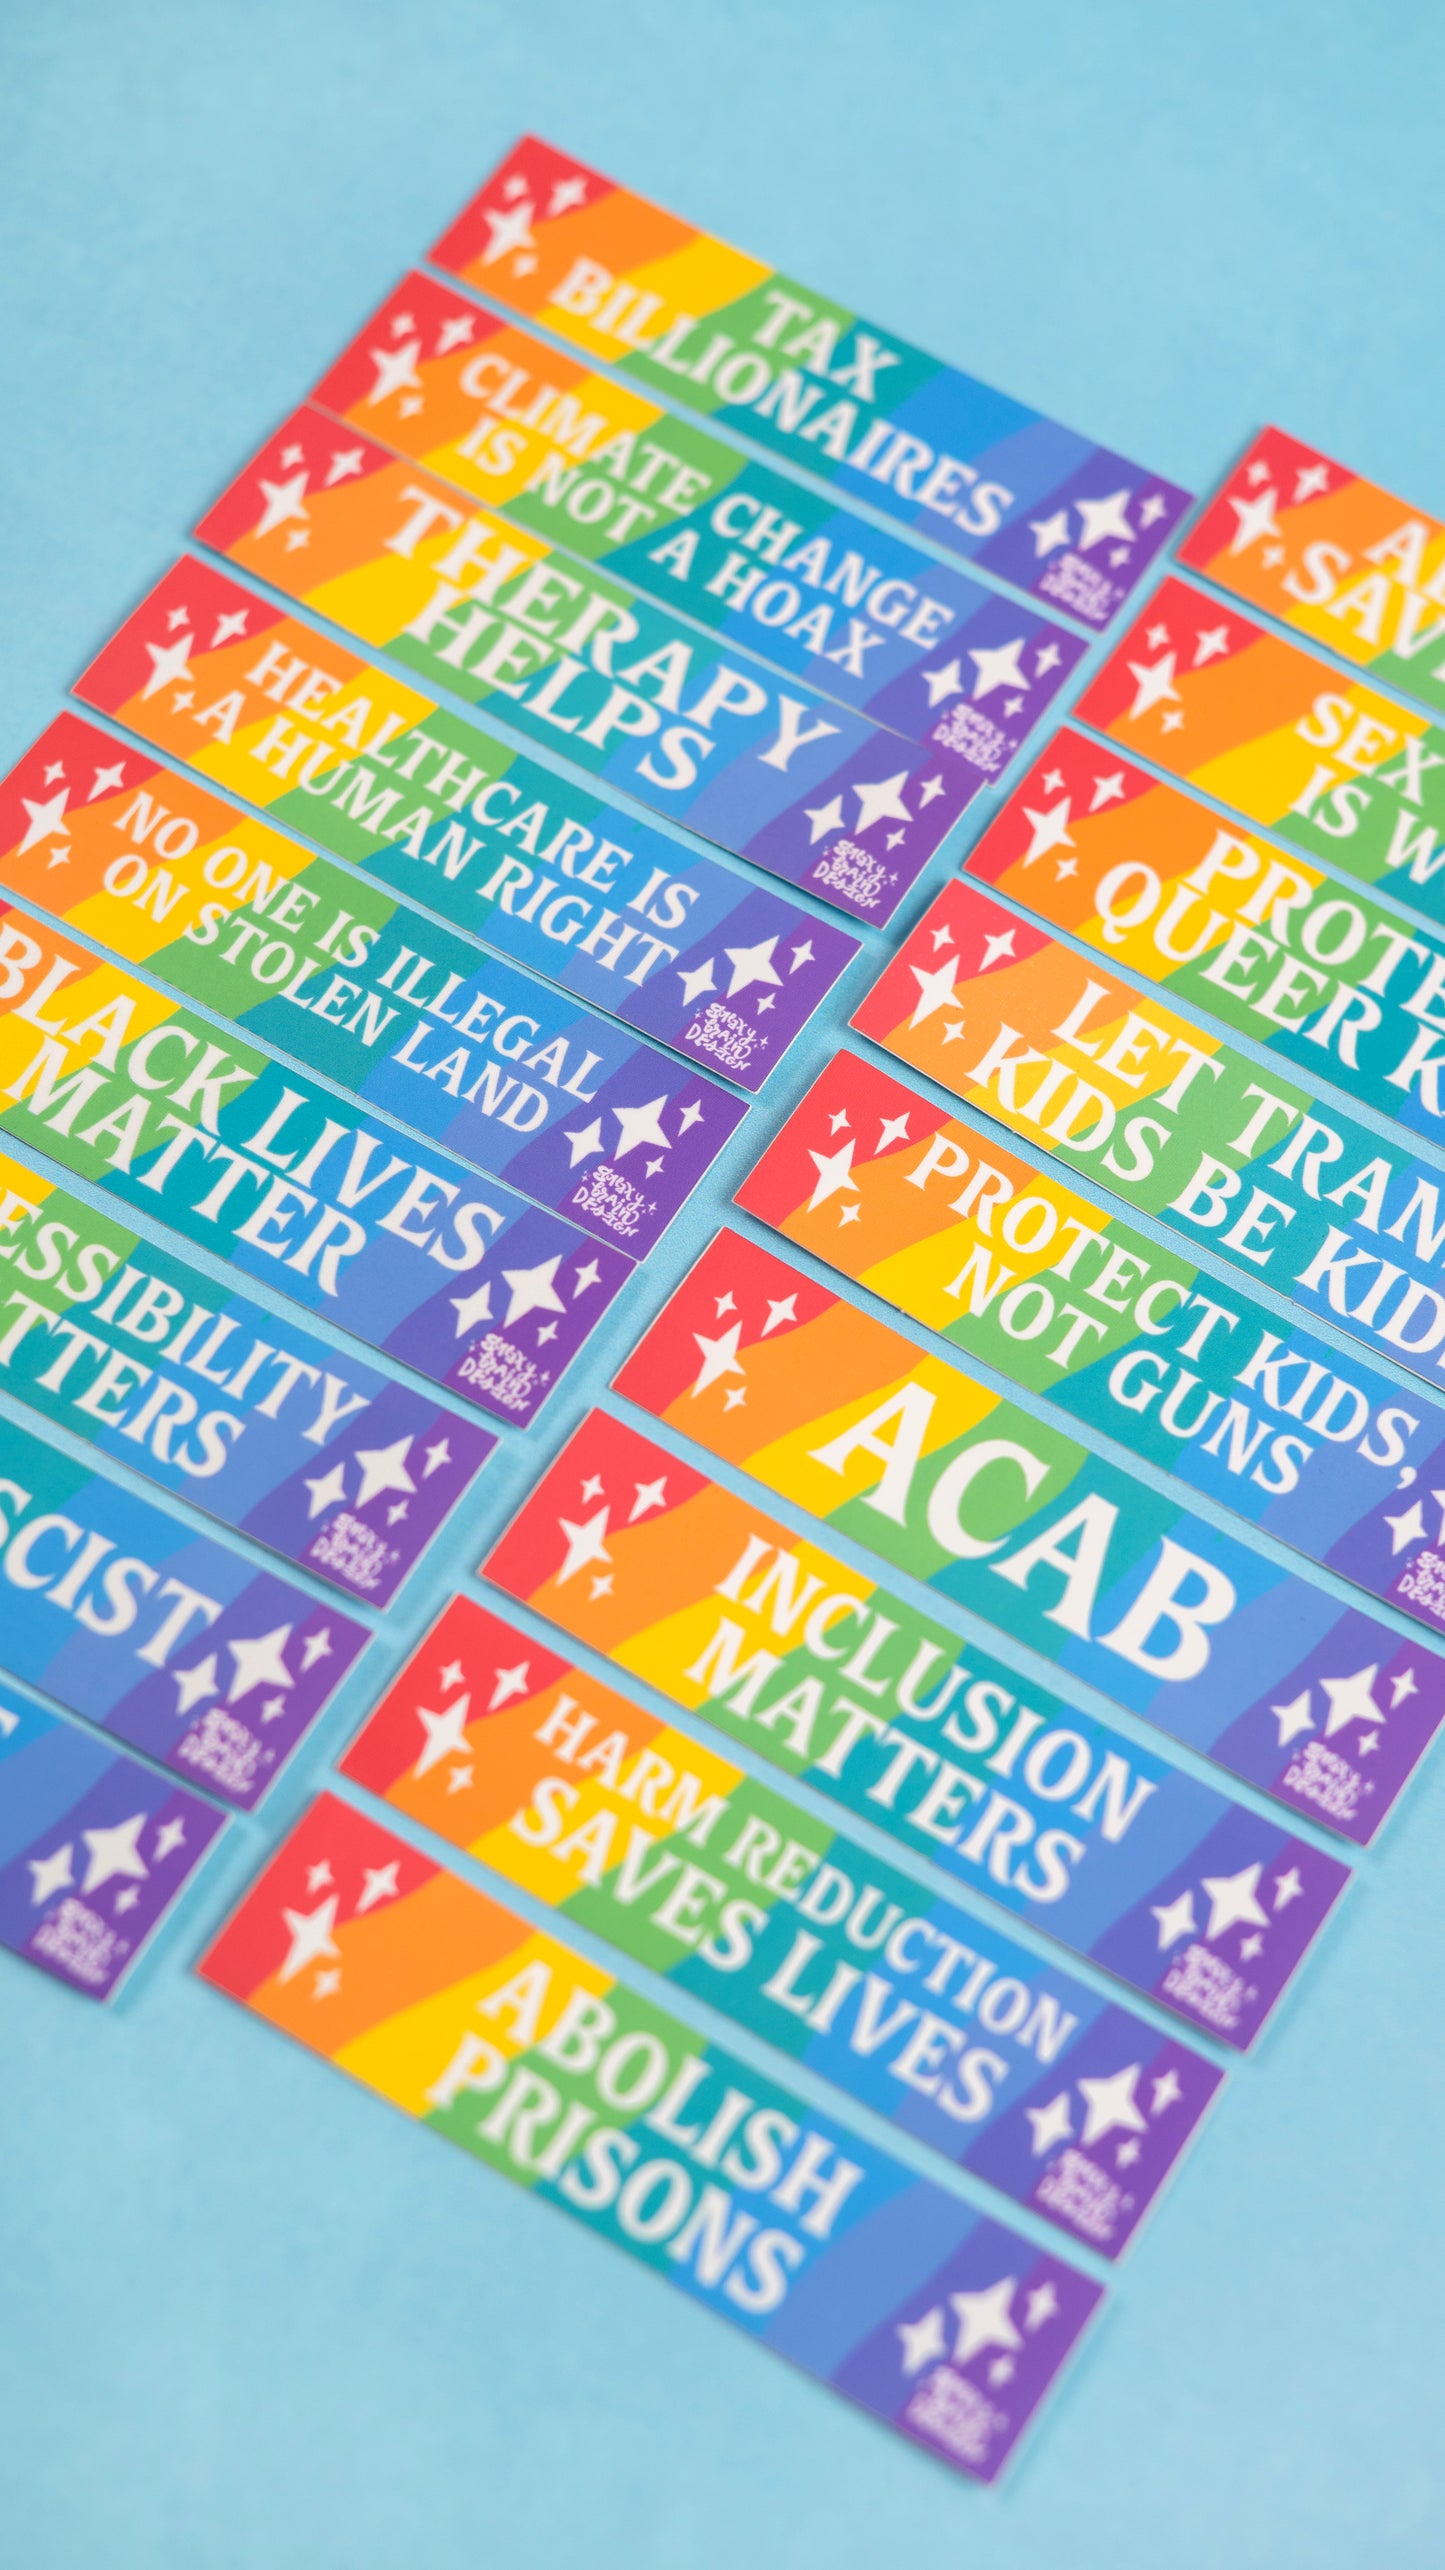 Protect Queer Kids Smartphone Bumper Sticker